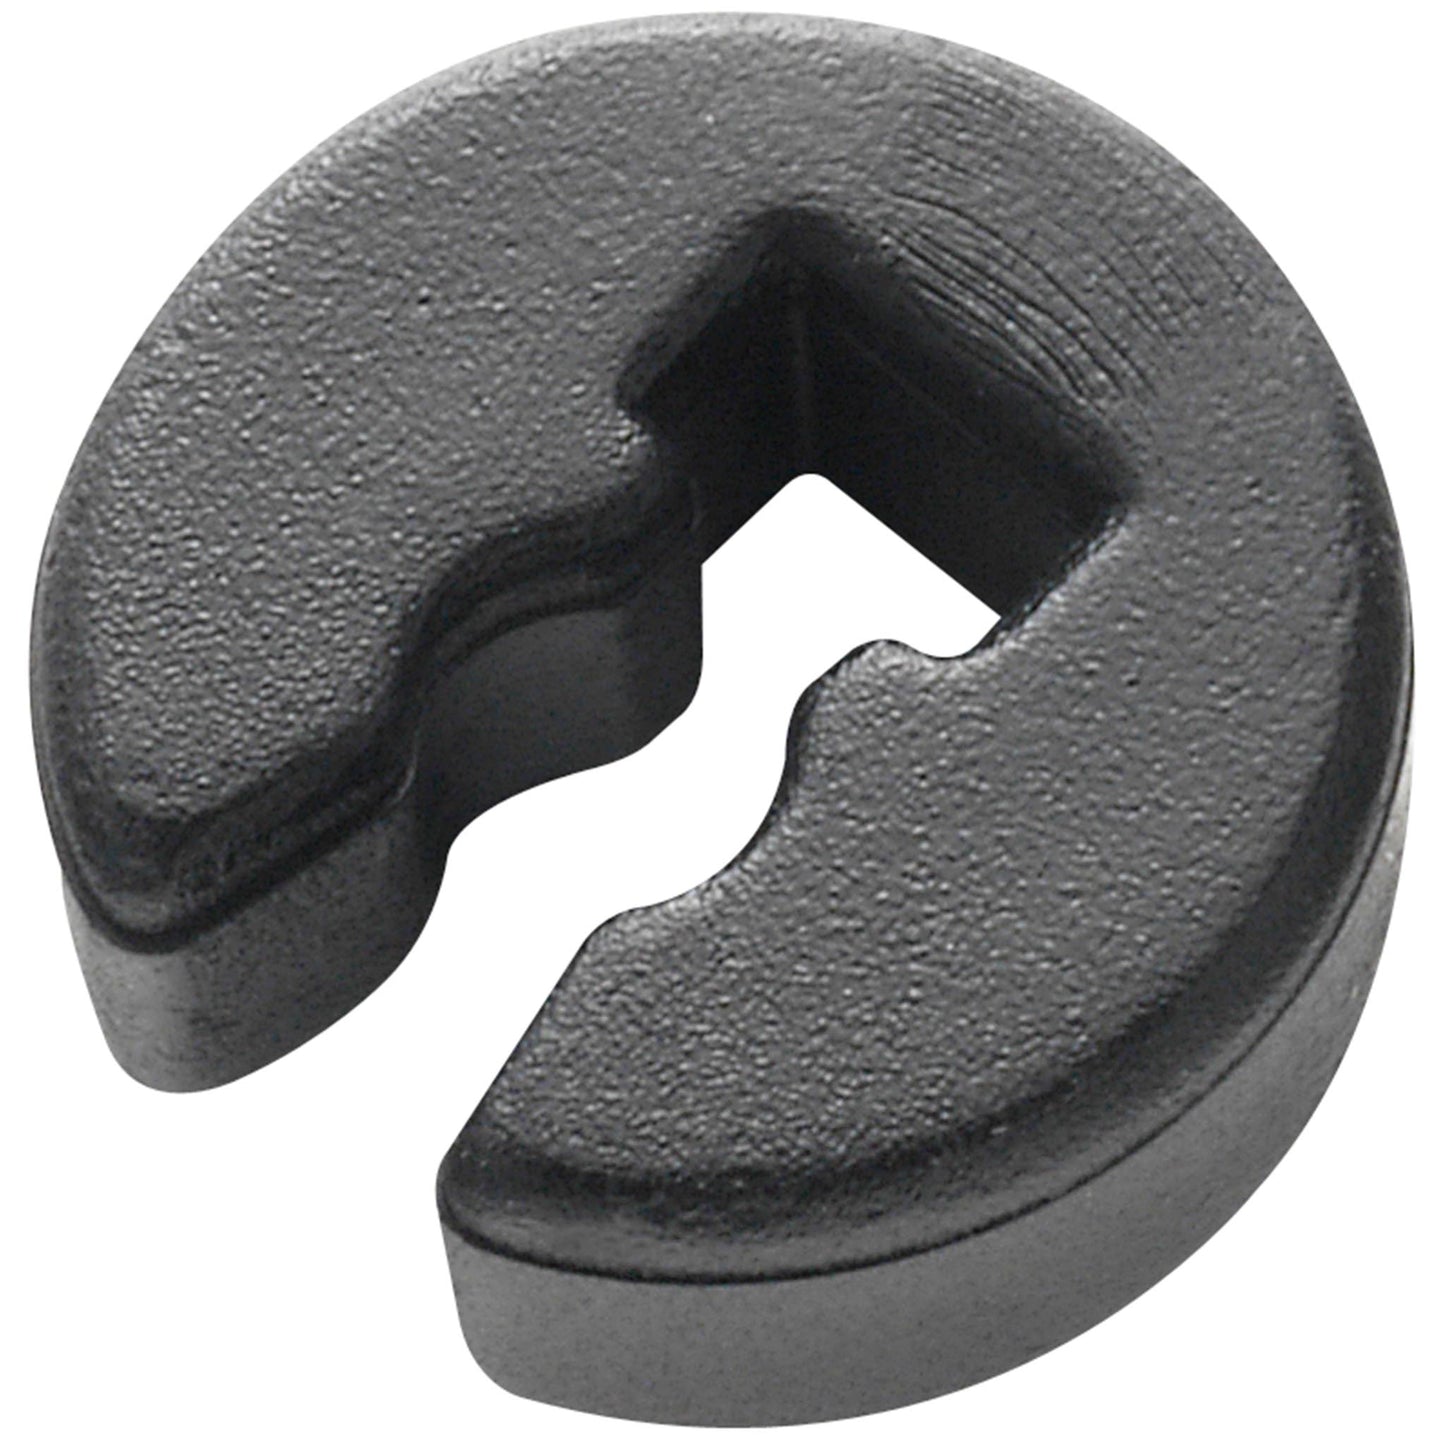 Black plastic cable fasteners